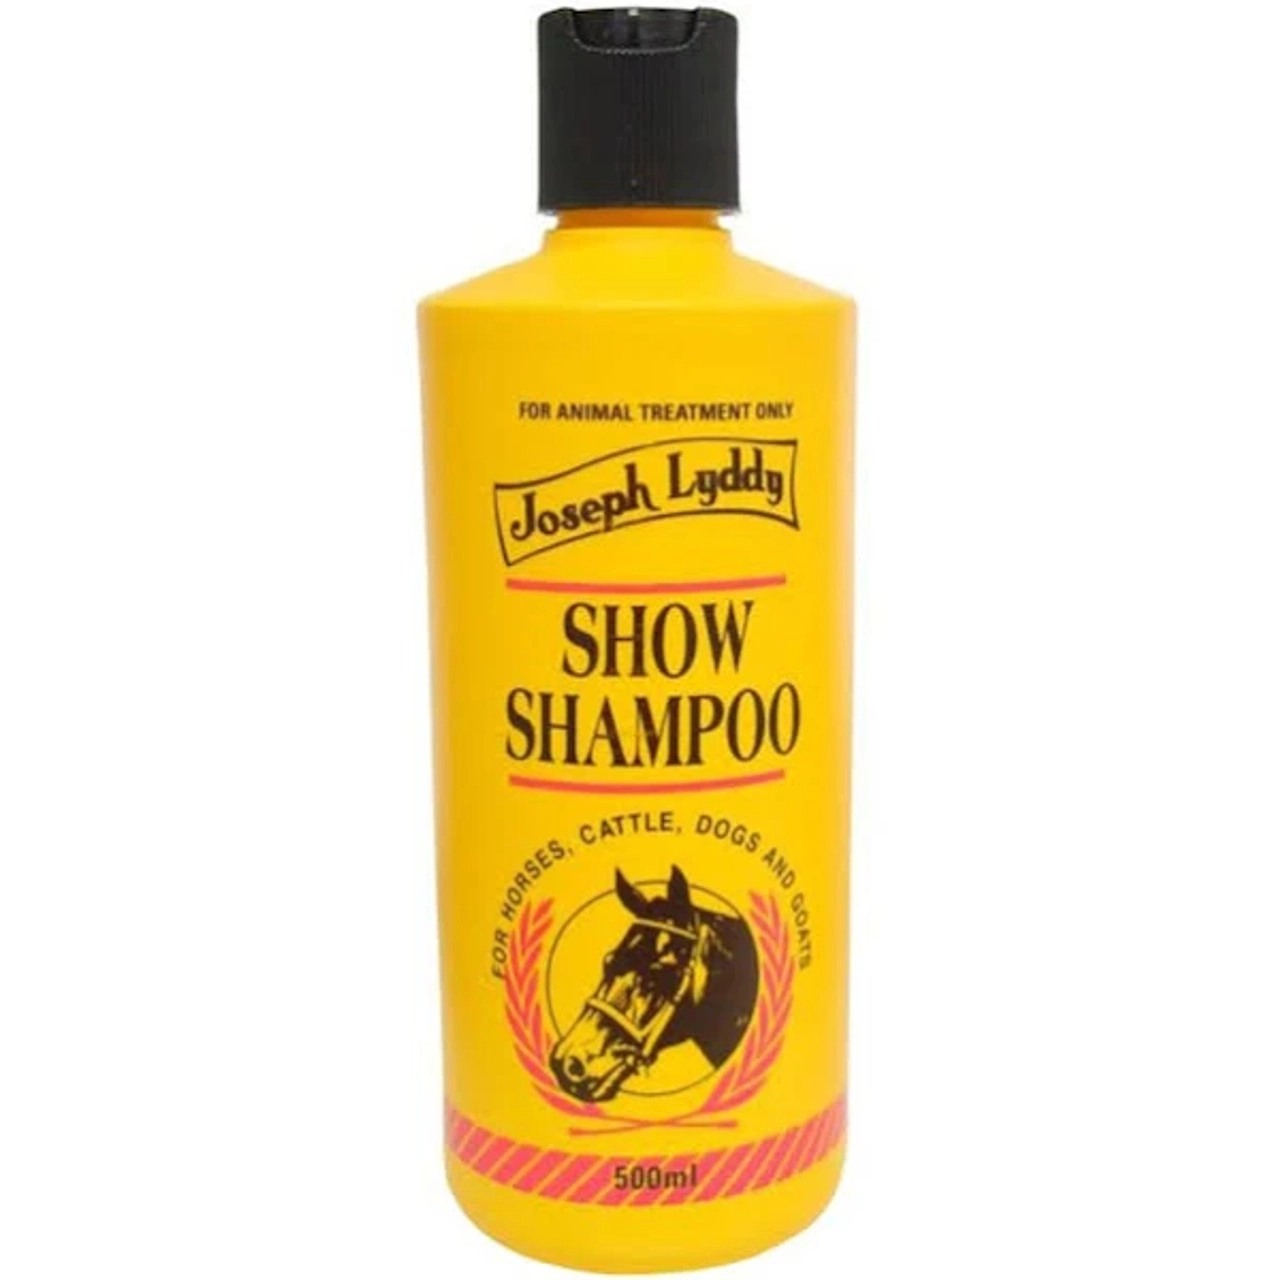 Joseph Lyddy Show Shampoo